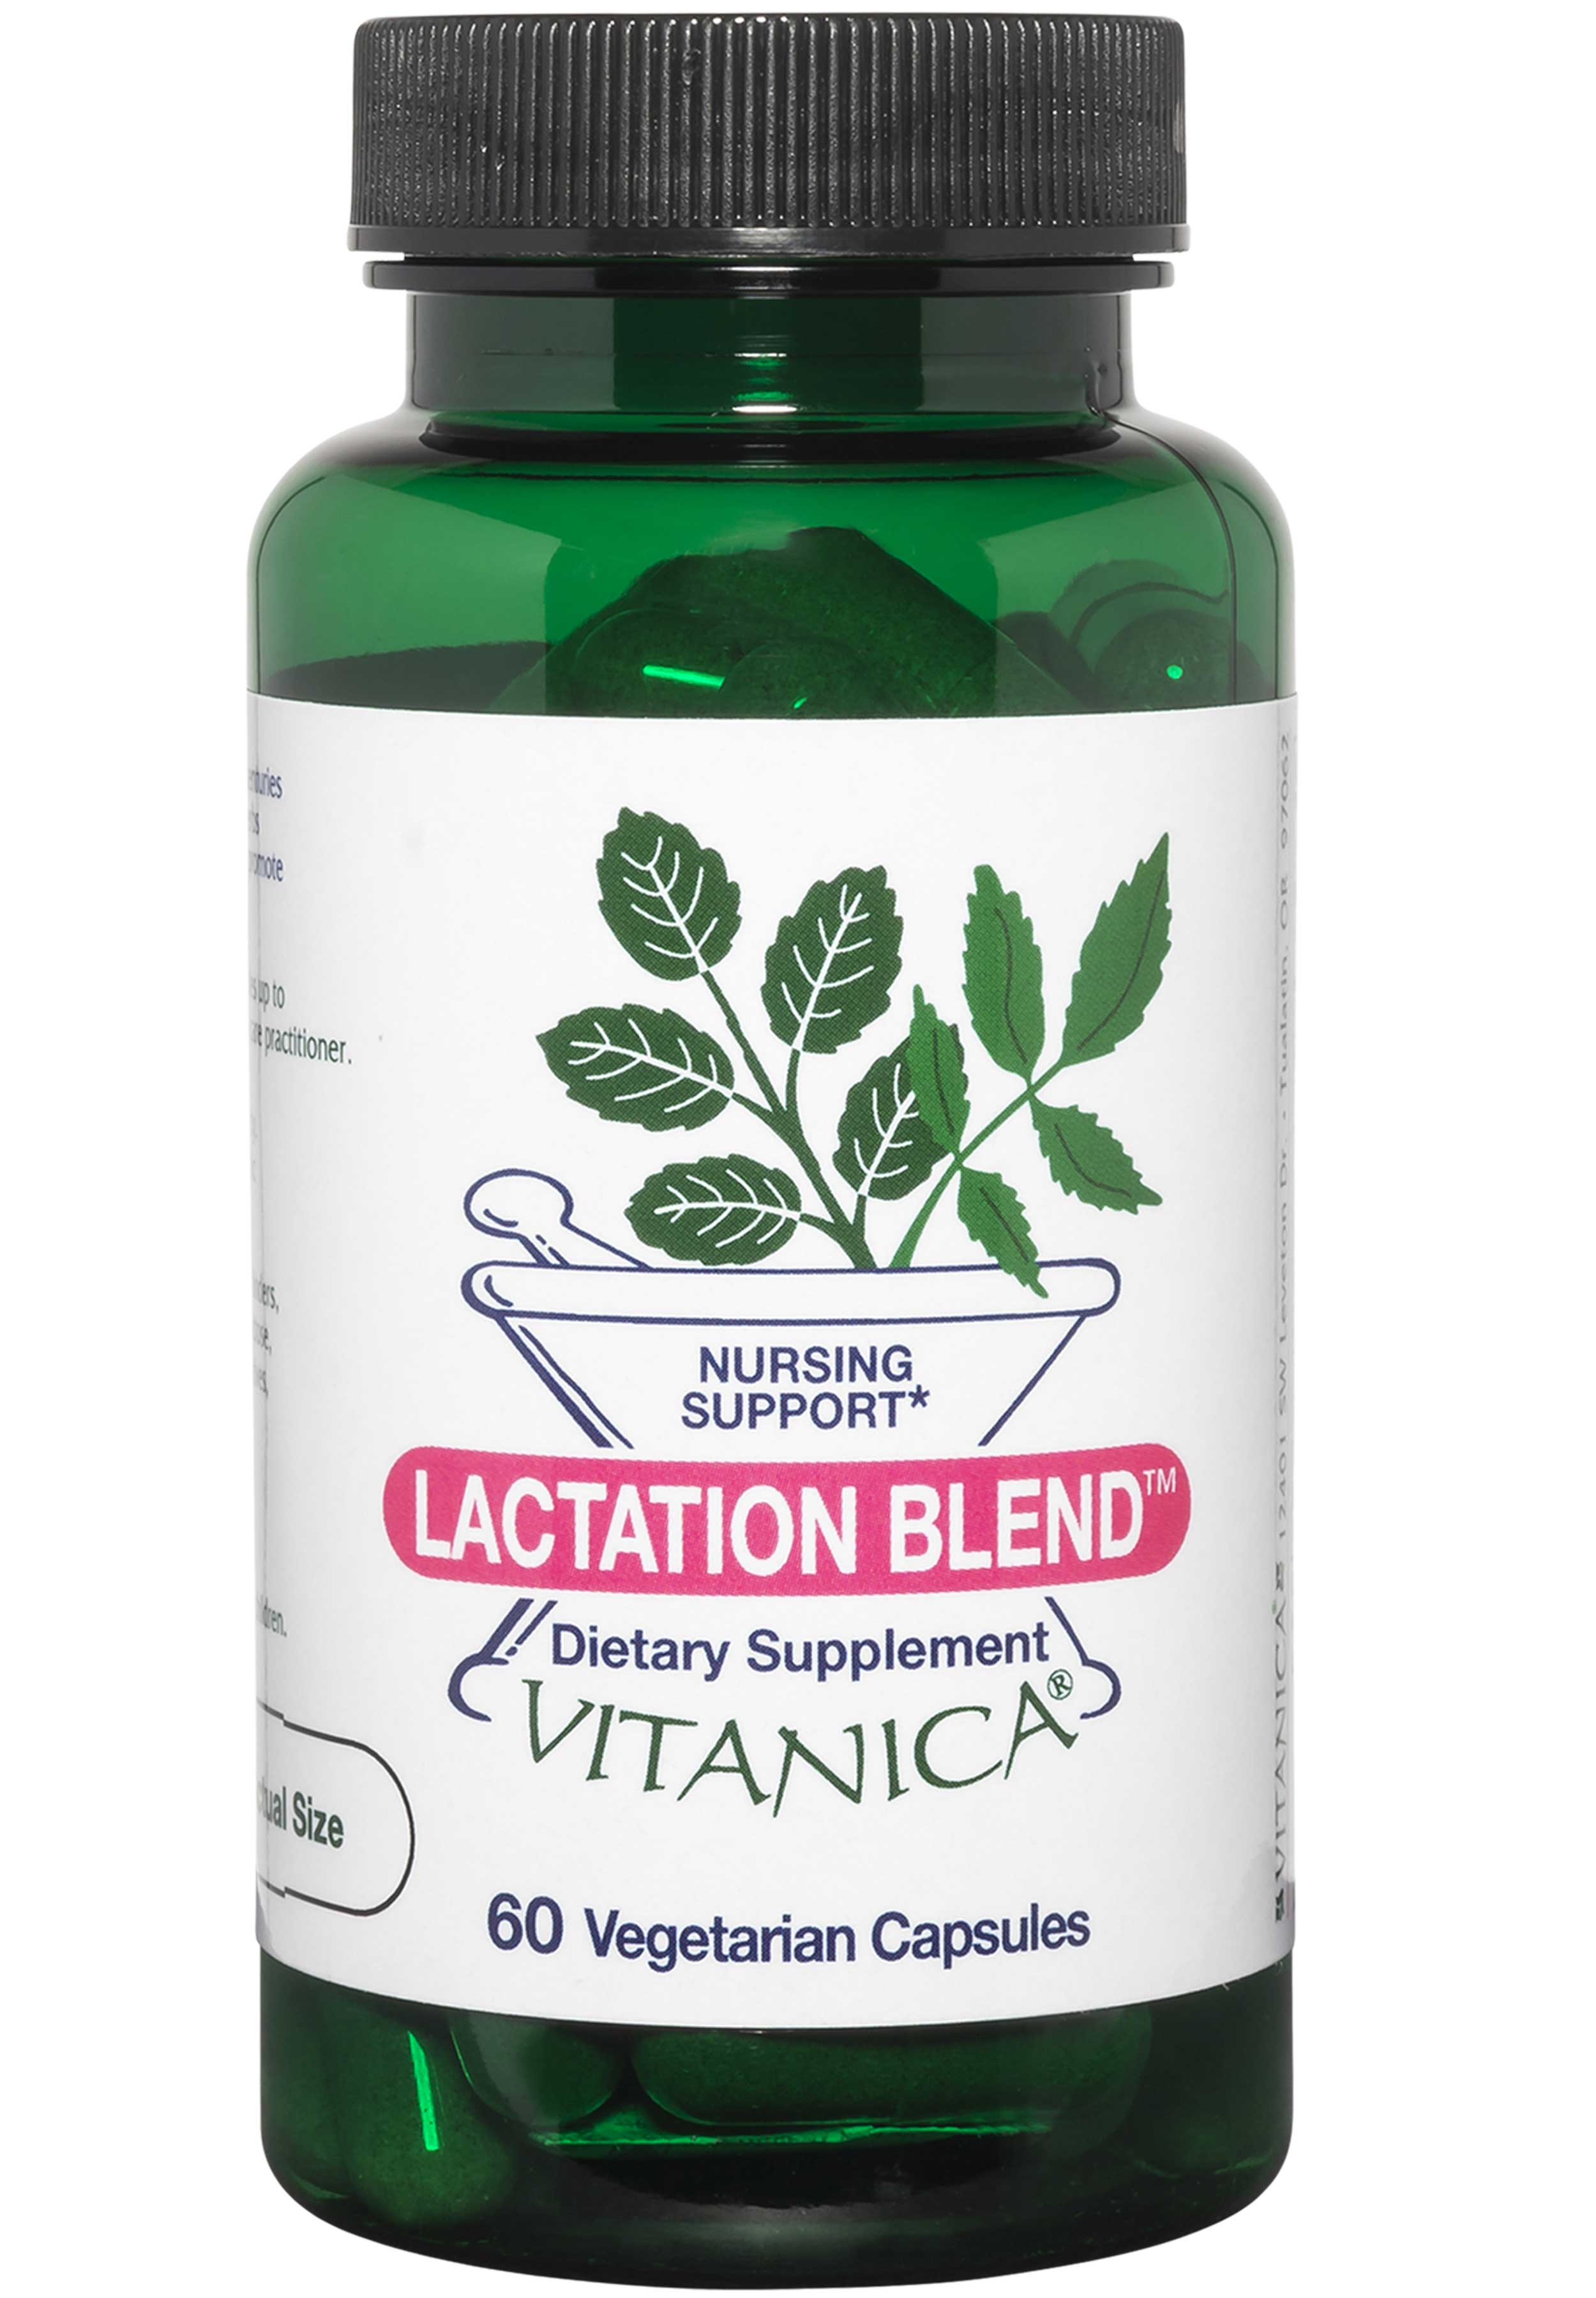 Vitanica Lactation Blend